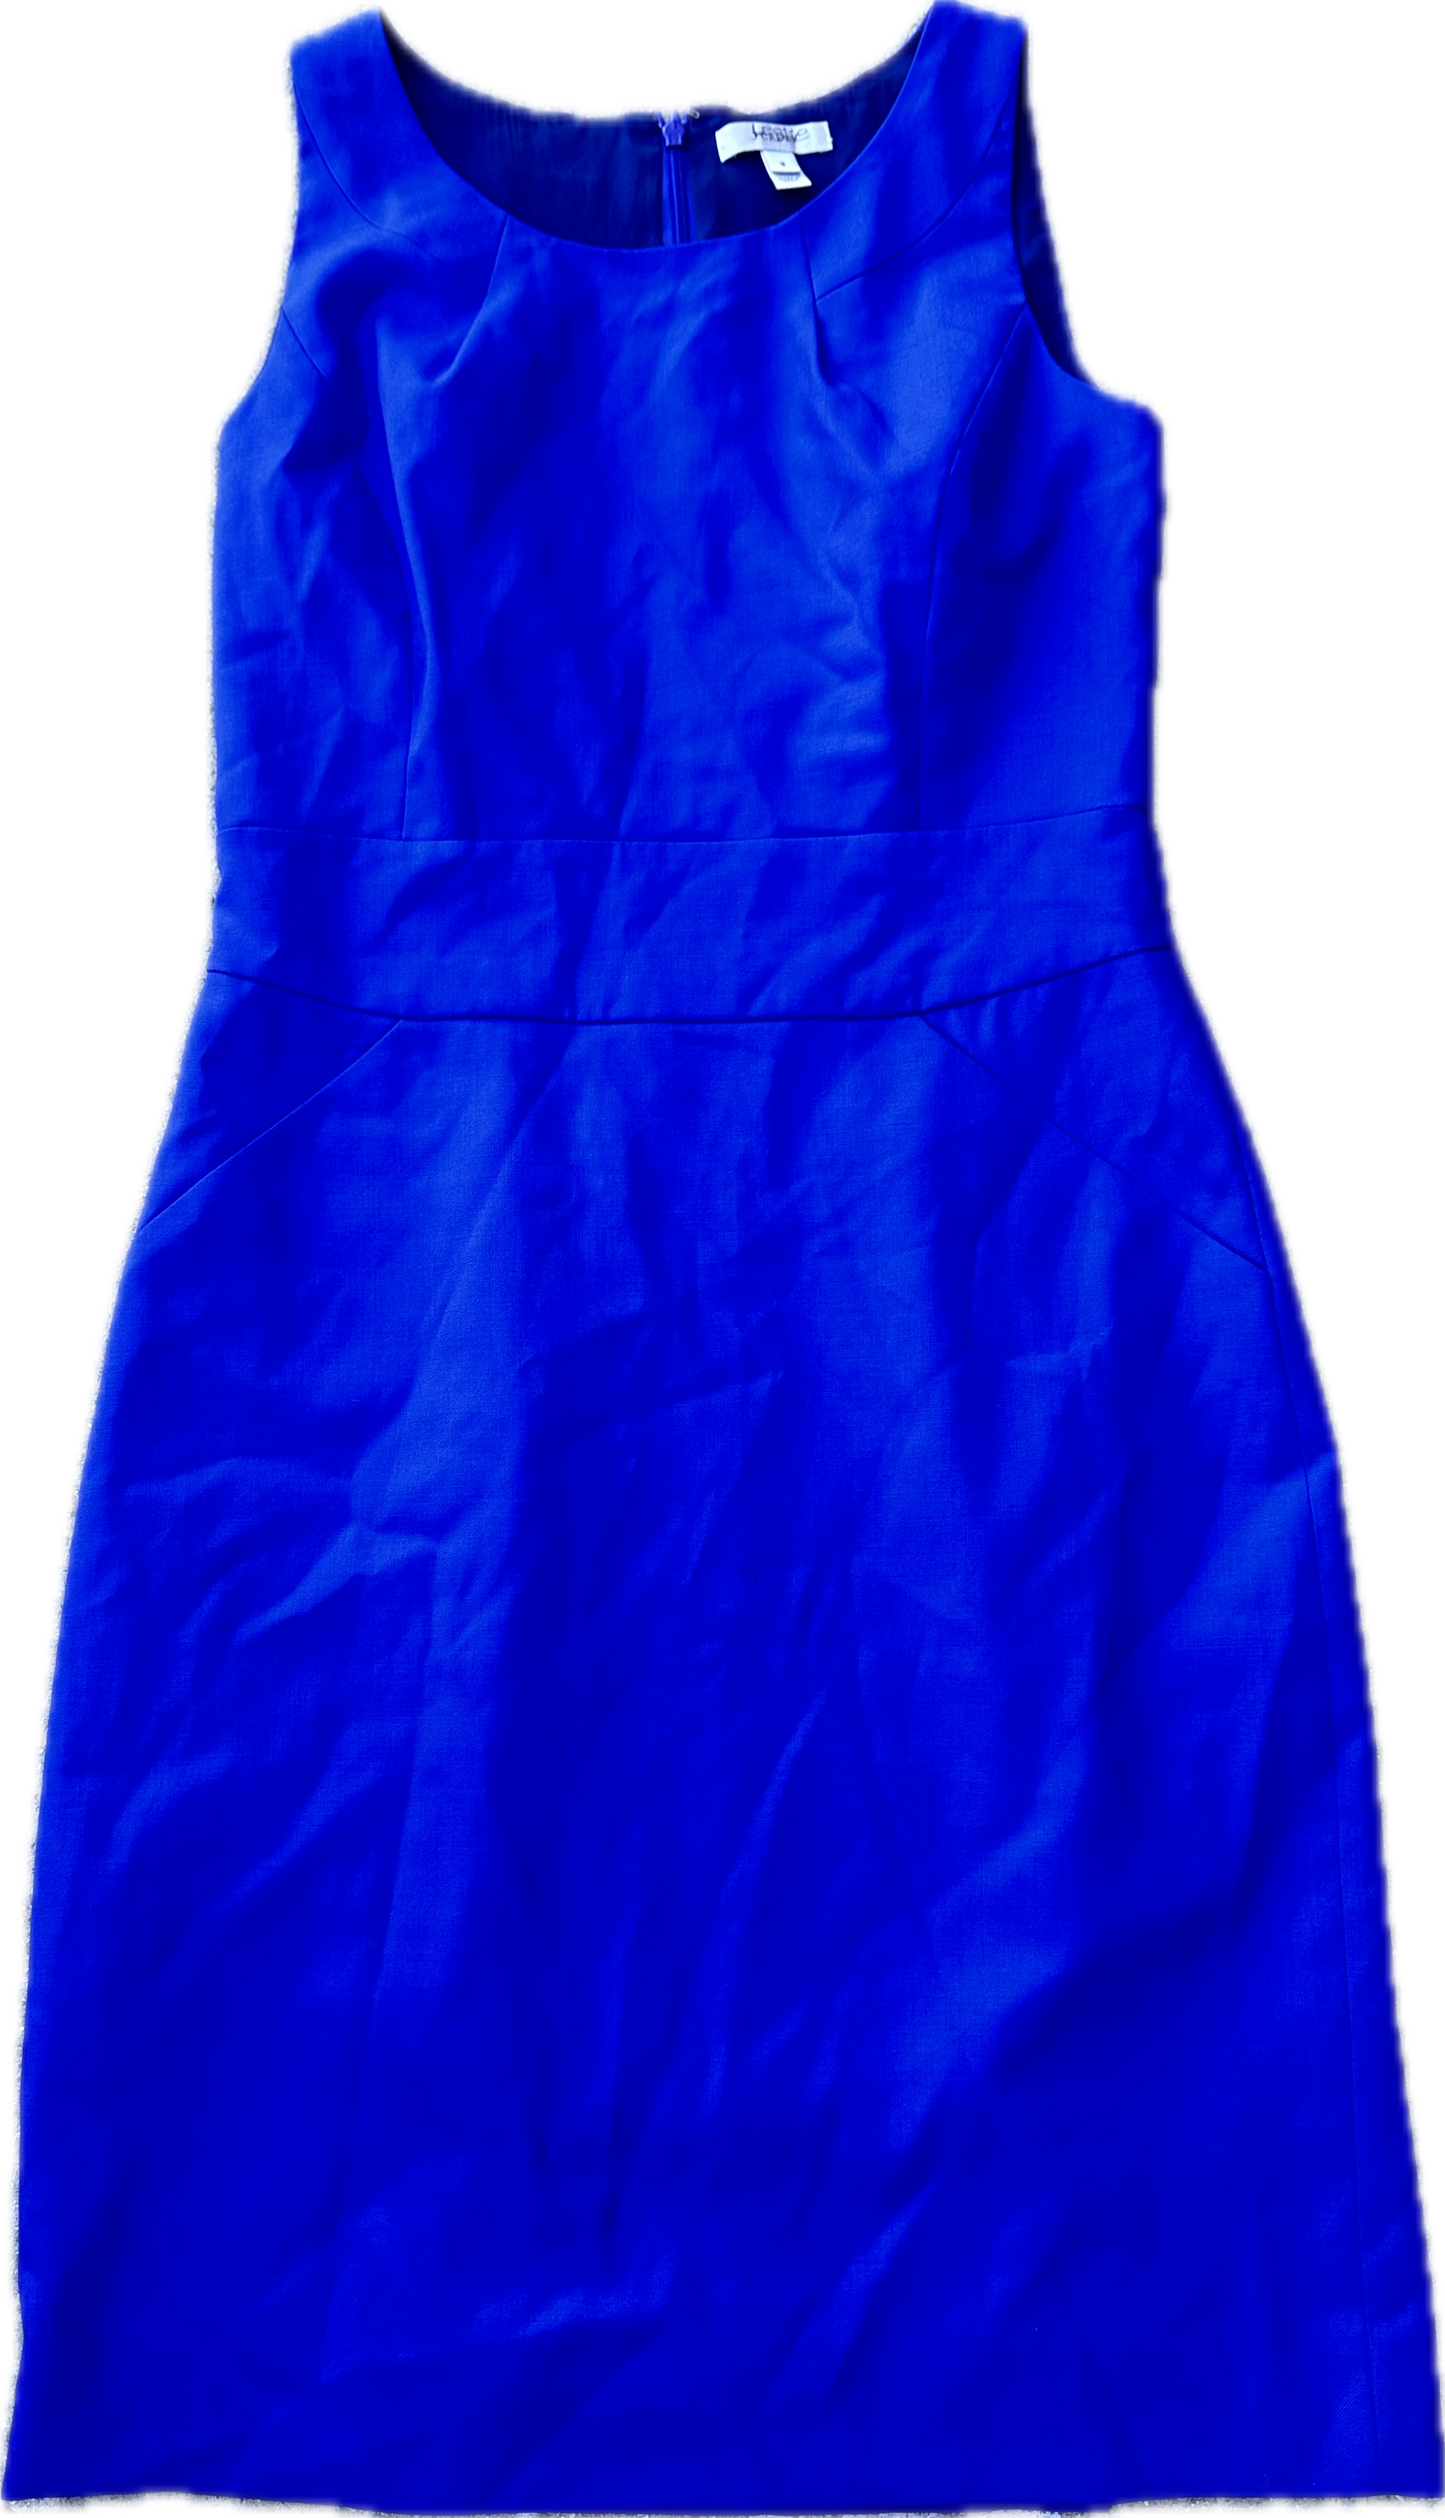 PARKS AND RECREATION: Leslie’s Designer Blue Dress Seen on Screen